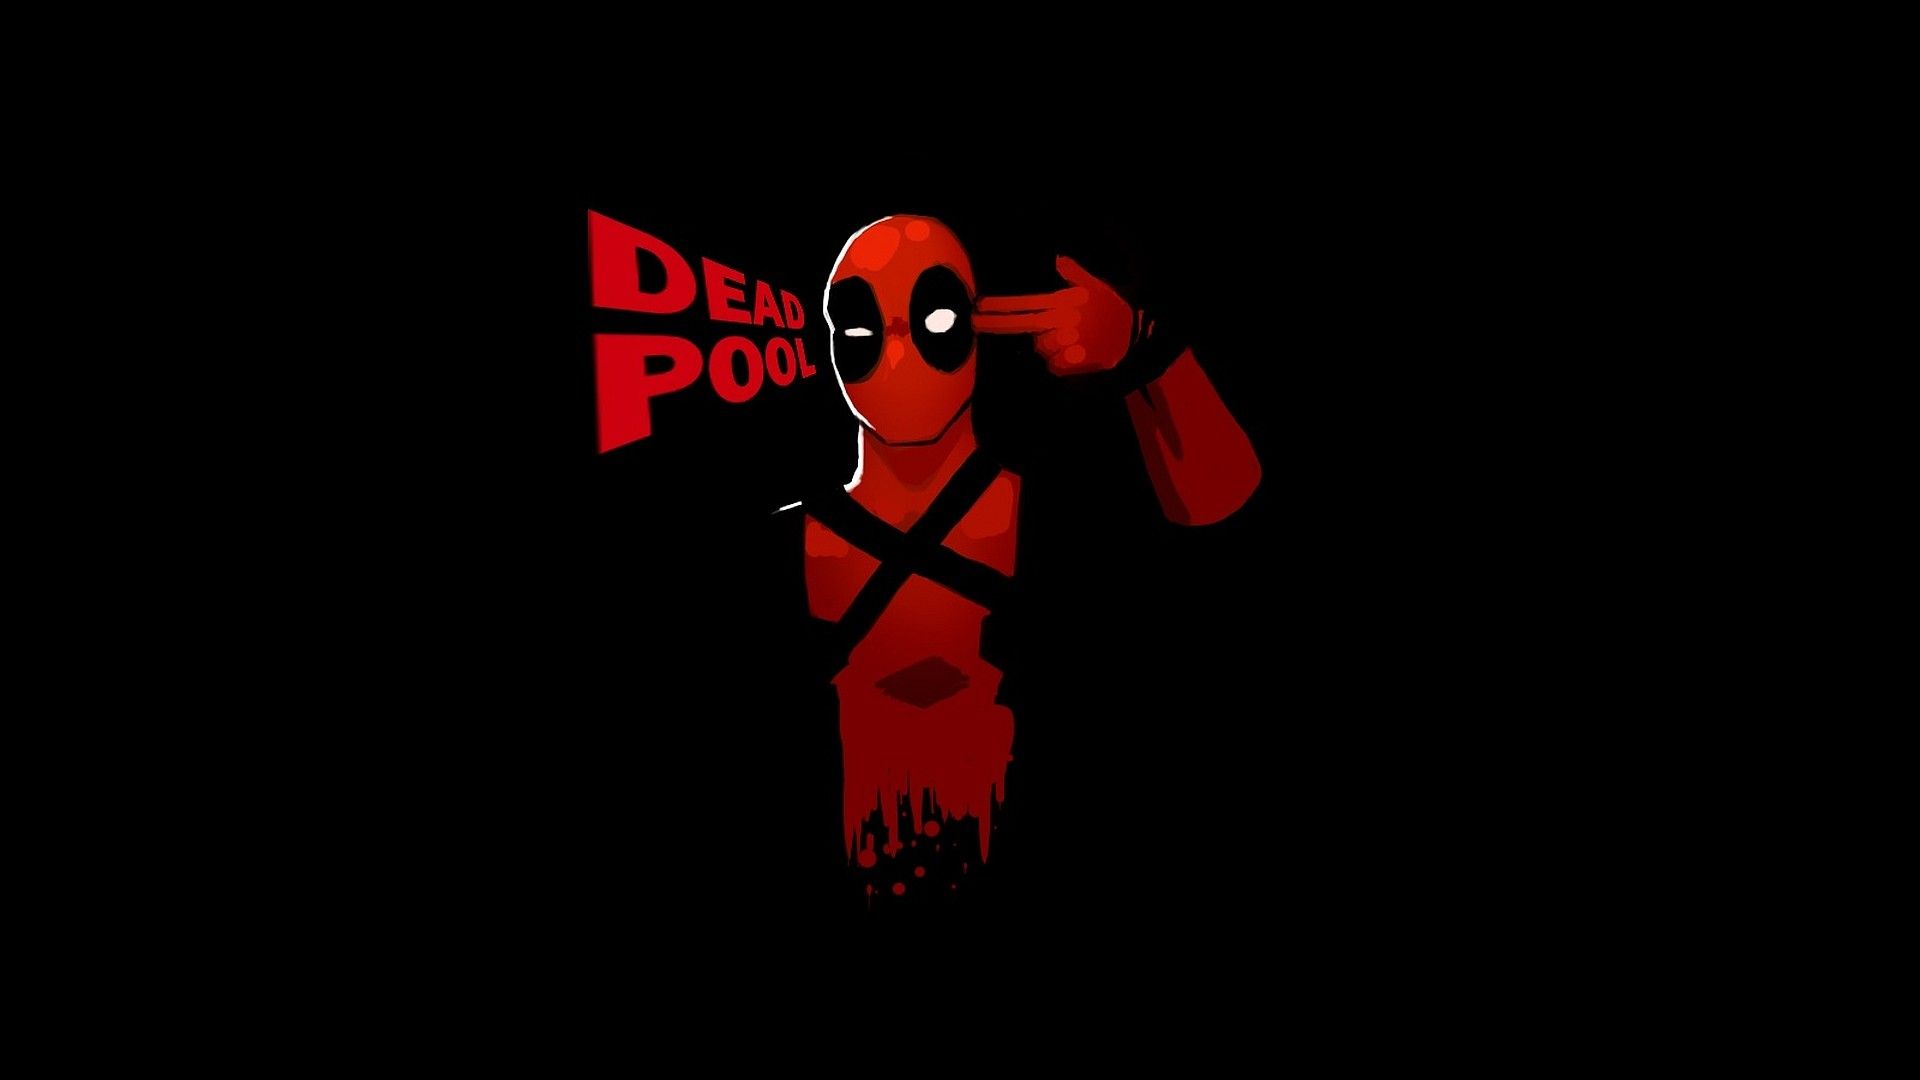 pc wallpaper. Deadpool wallpaper, Deadpool logo wallpaper, Deadpool HD wallpaper